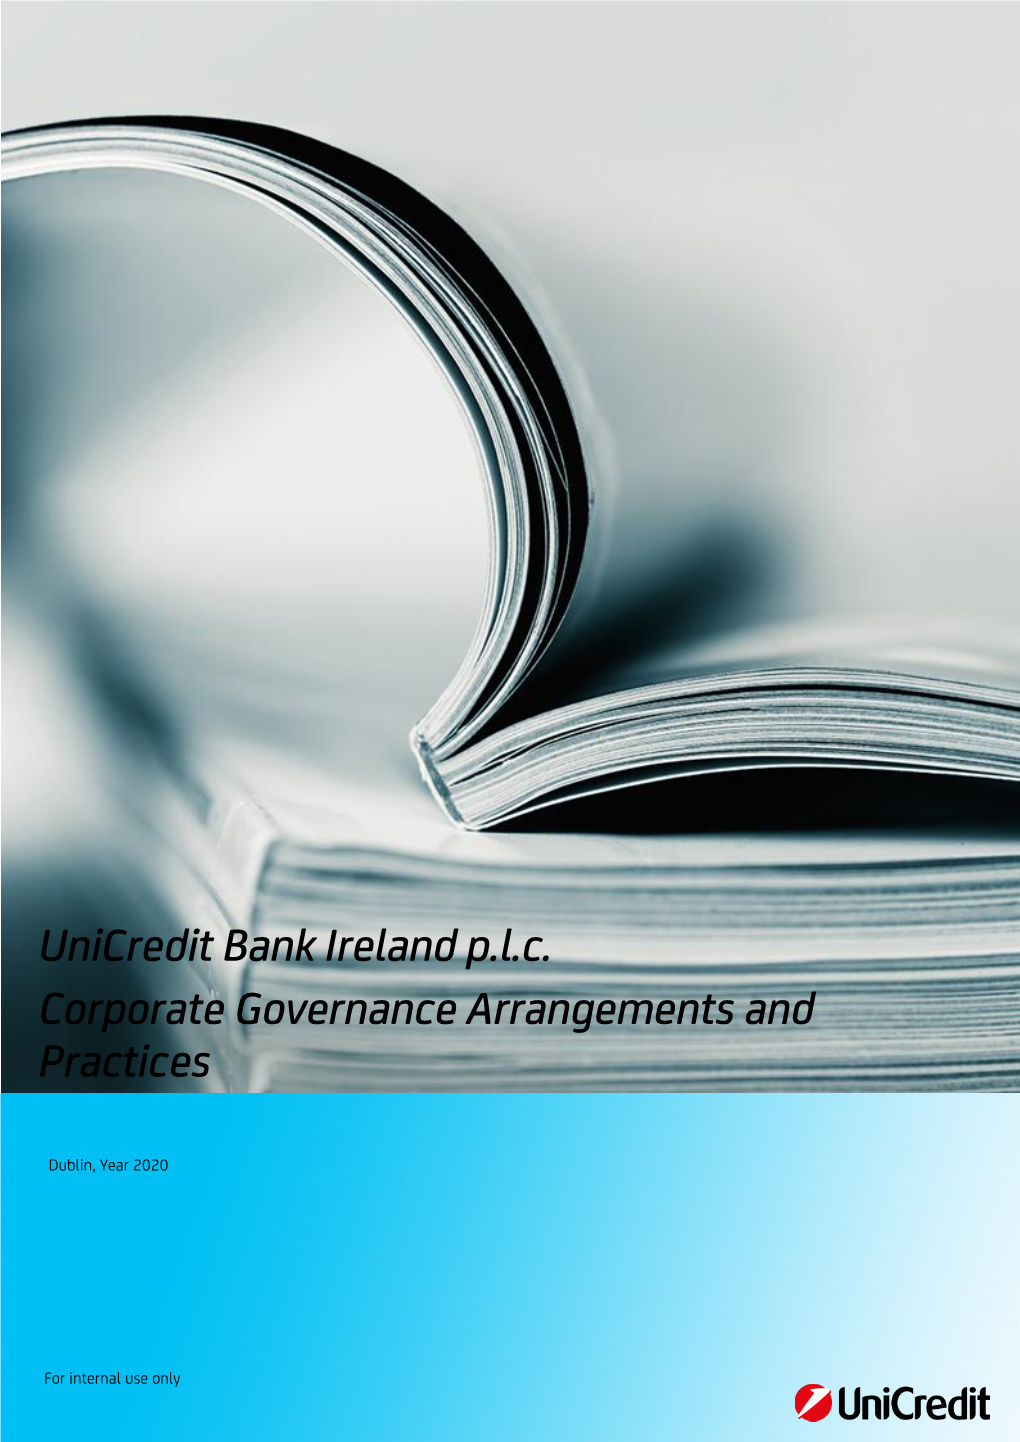 Unicredit Bank Ireland P.L.C. Corporate Governance Arrangements and Practices